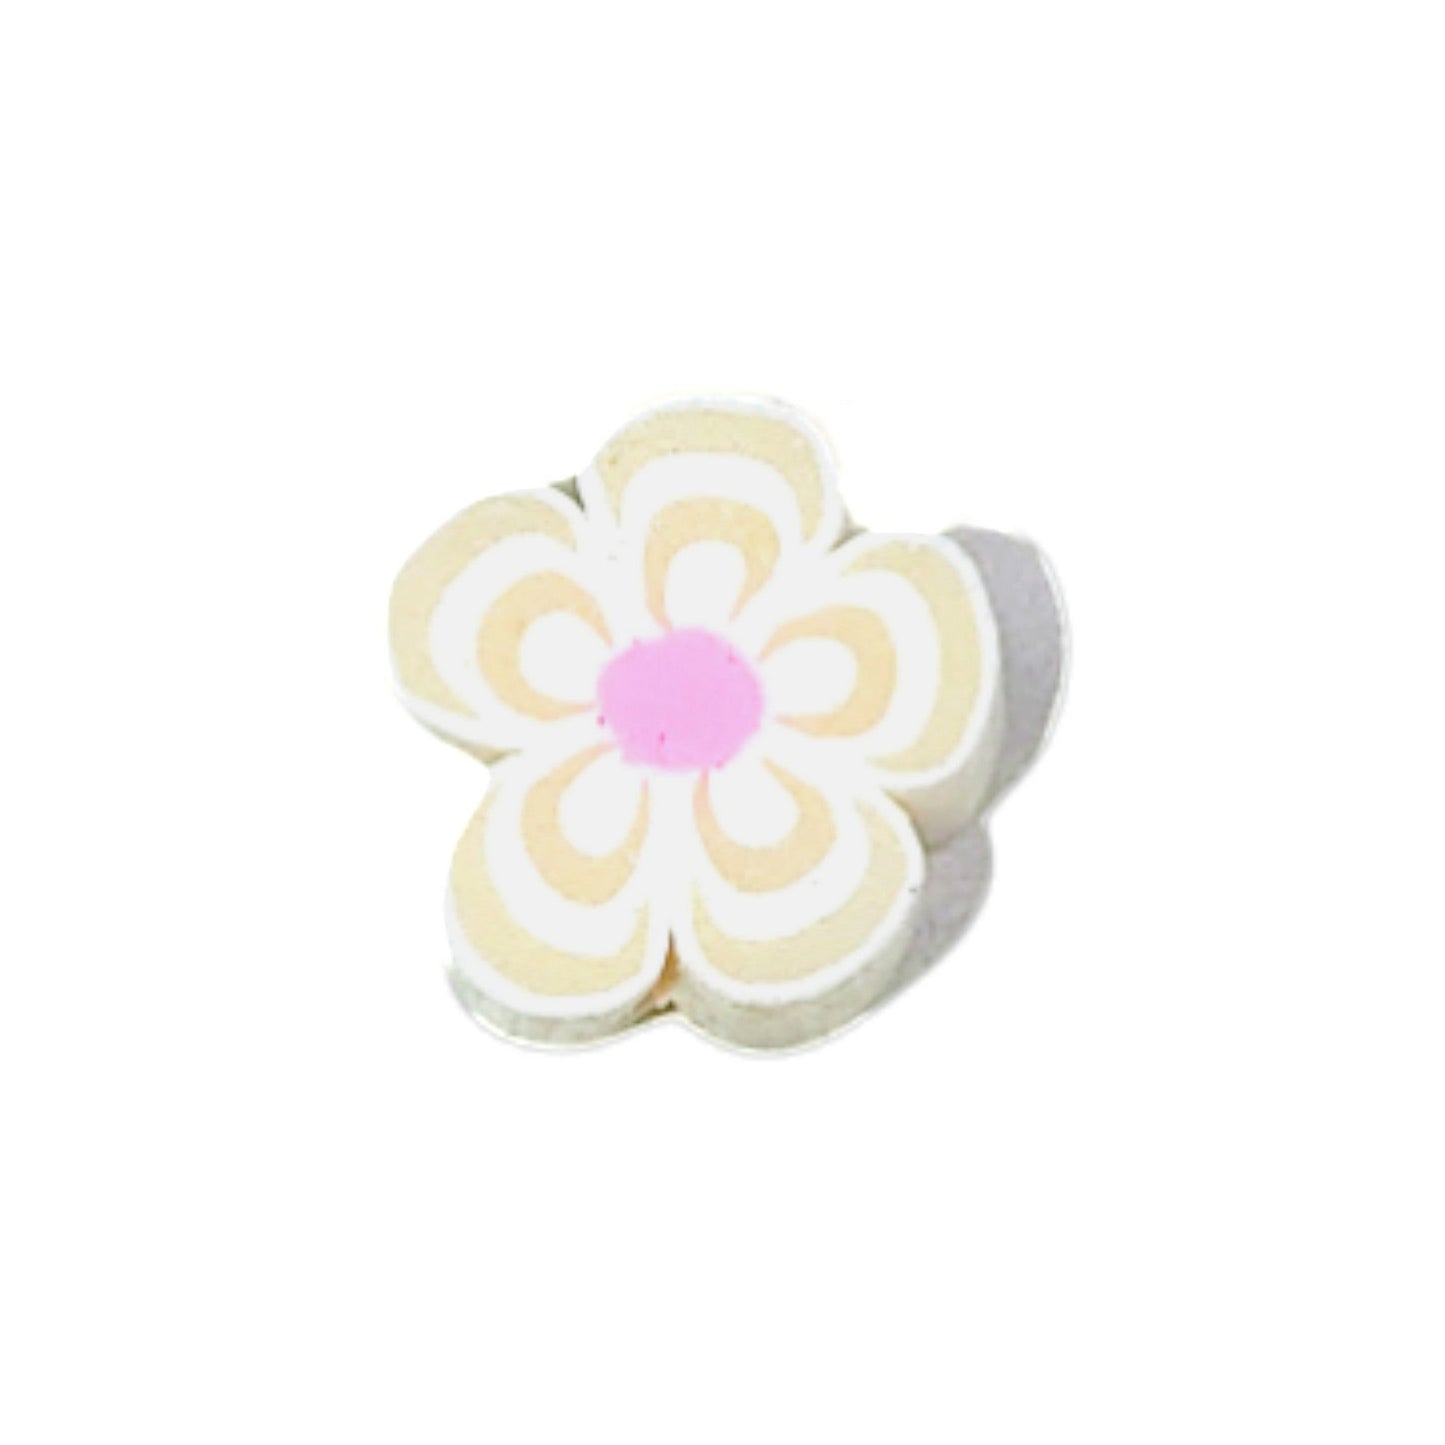 Indian Petals Flower Shape Soft Resin Motif For Crafting or Decoration - 13539